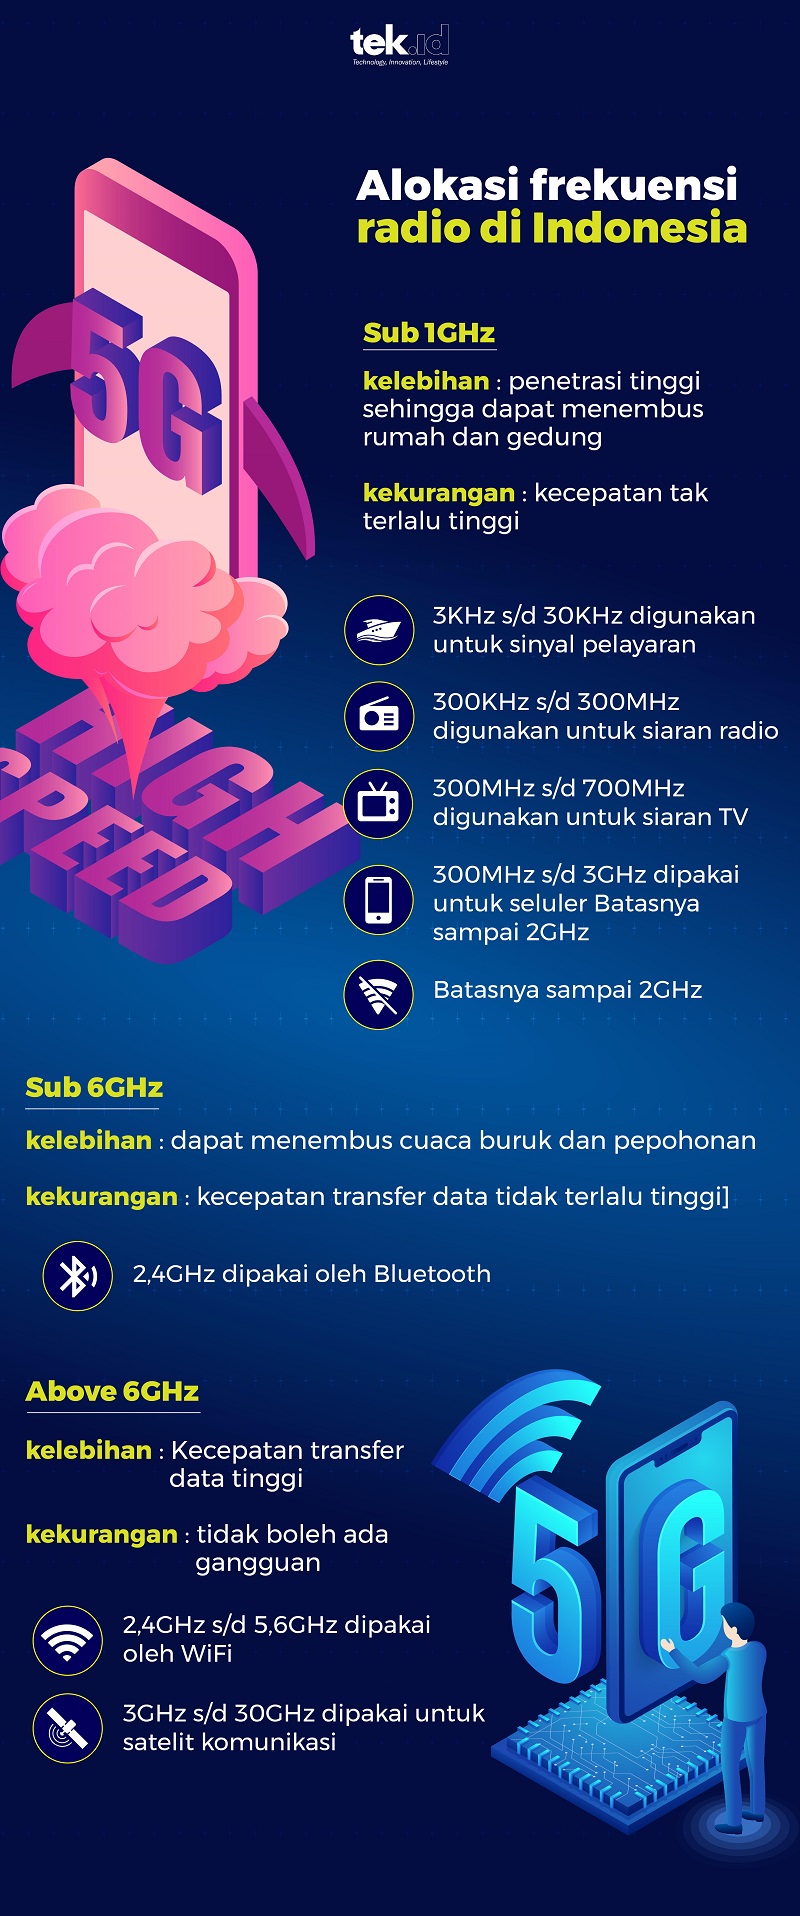 Aloksai frekuensi radio di Indonesia